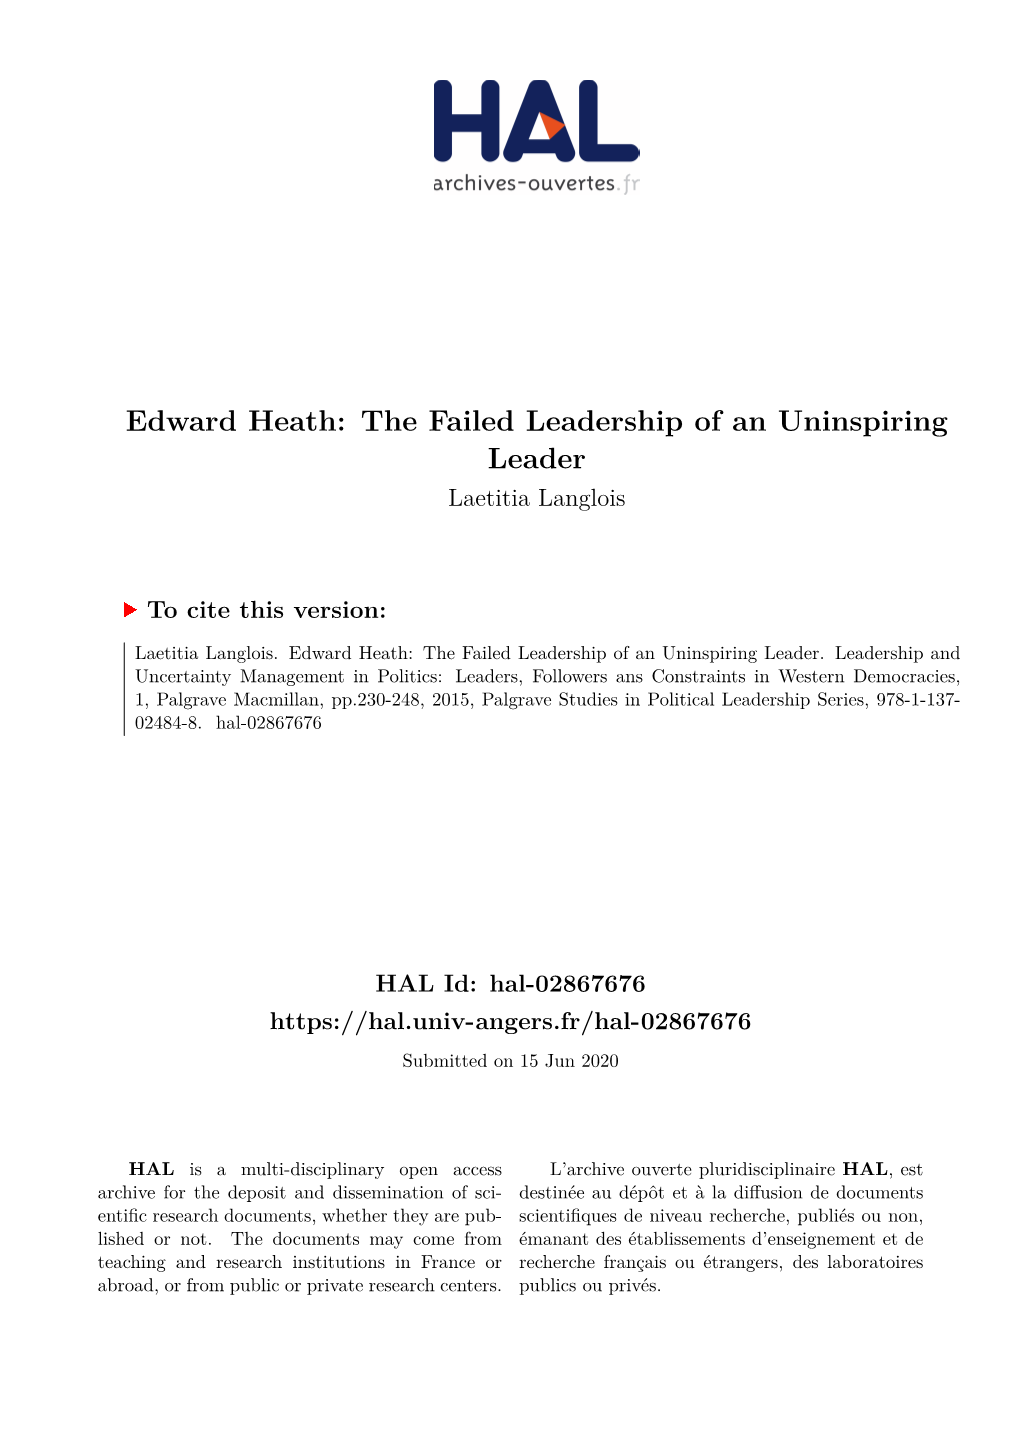 Edward Heath: the Failed Leadership of an Uninspiring Leader Laetitia Langlois